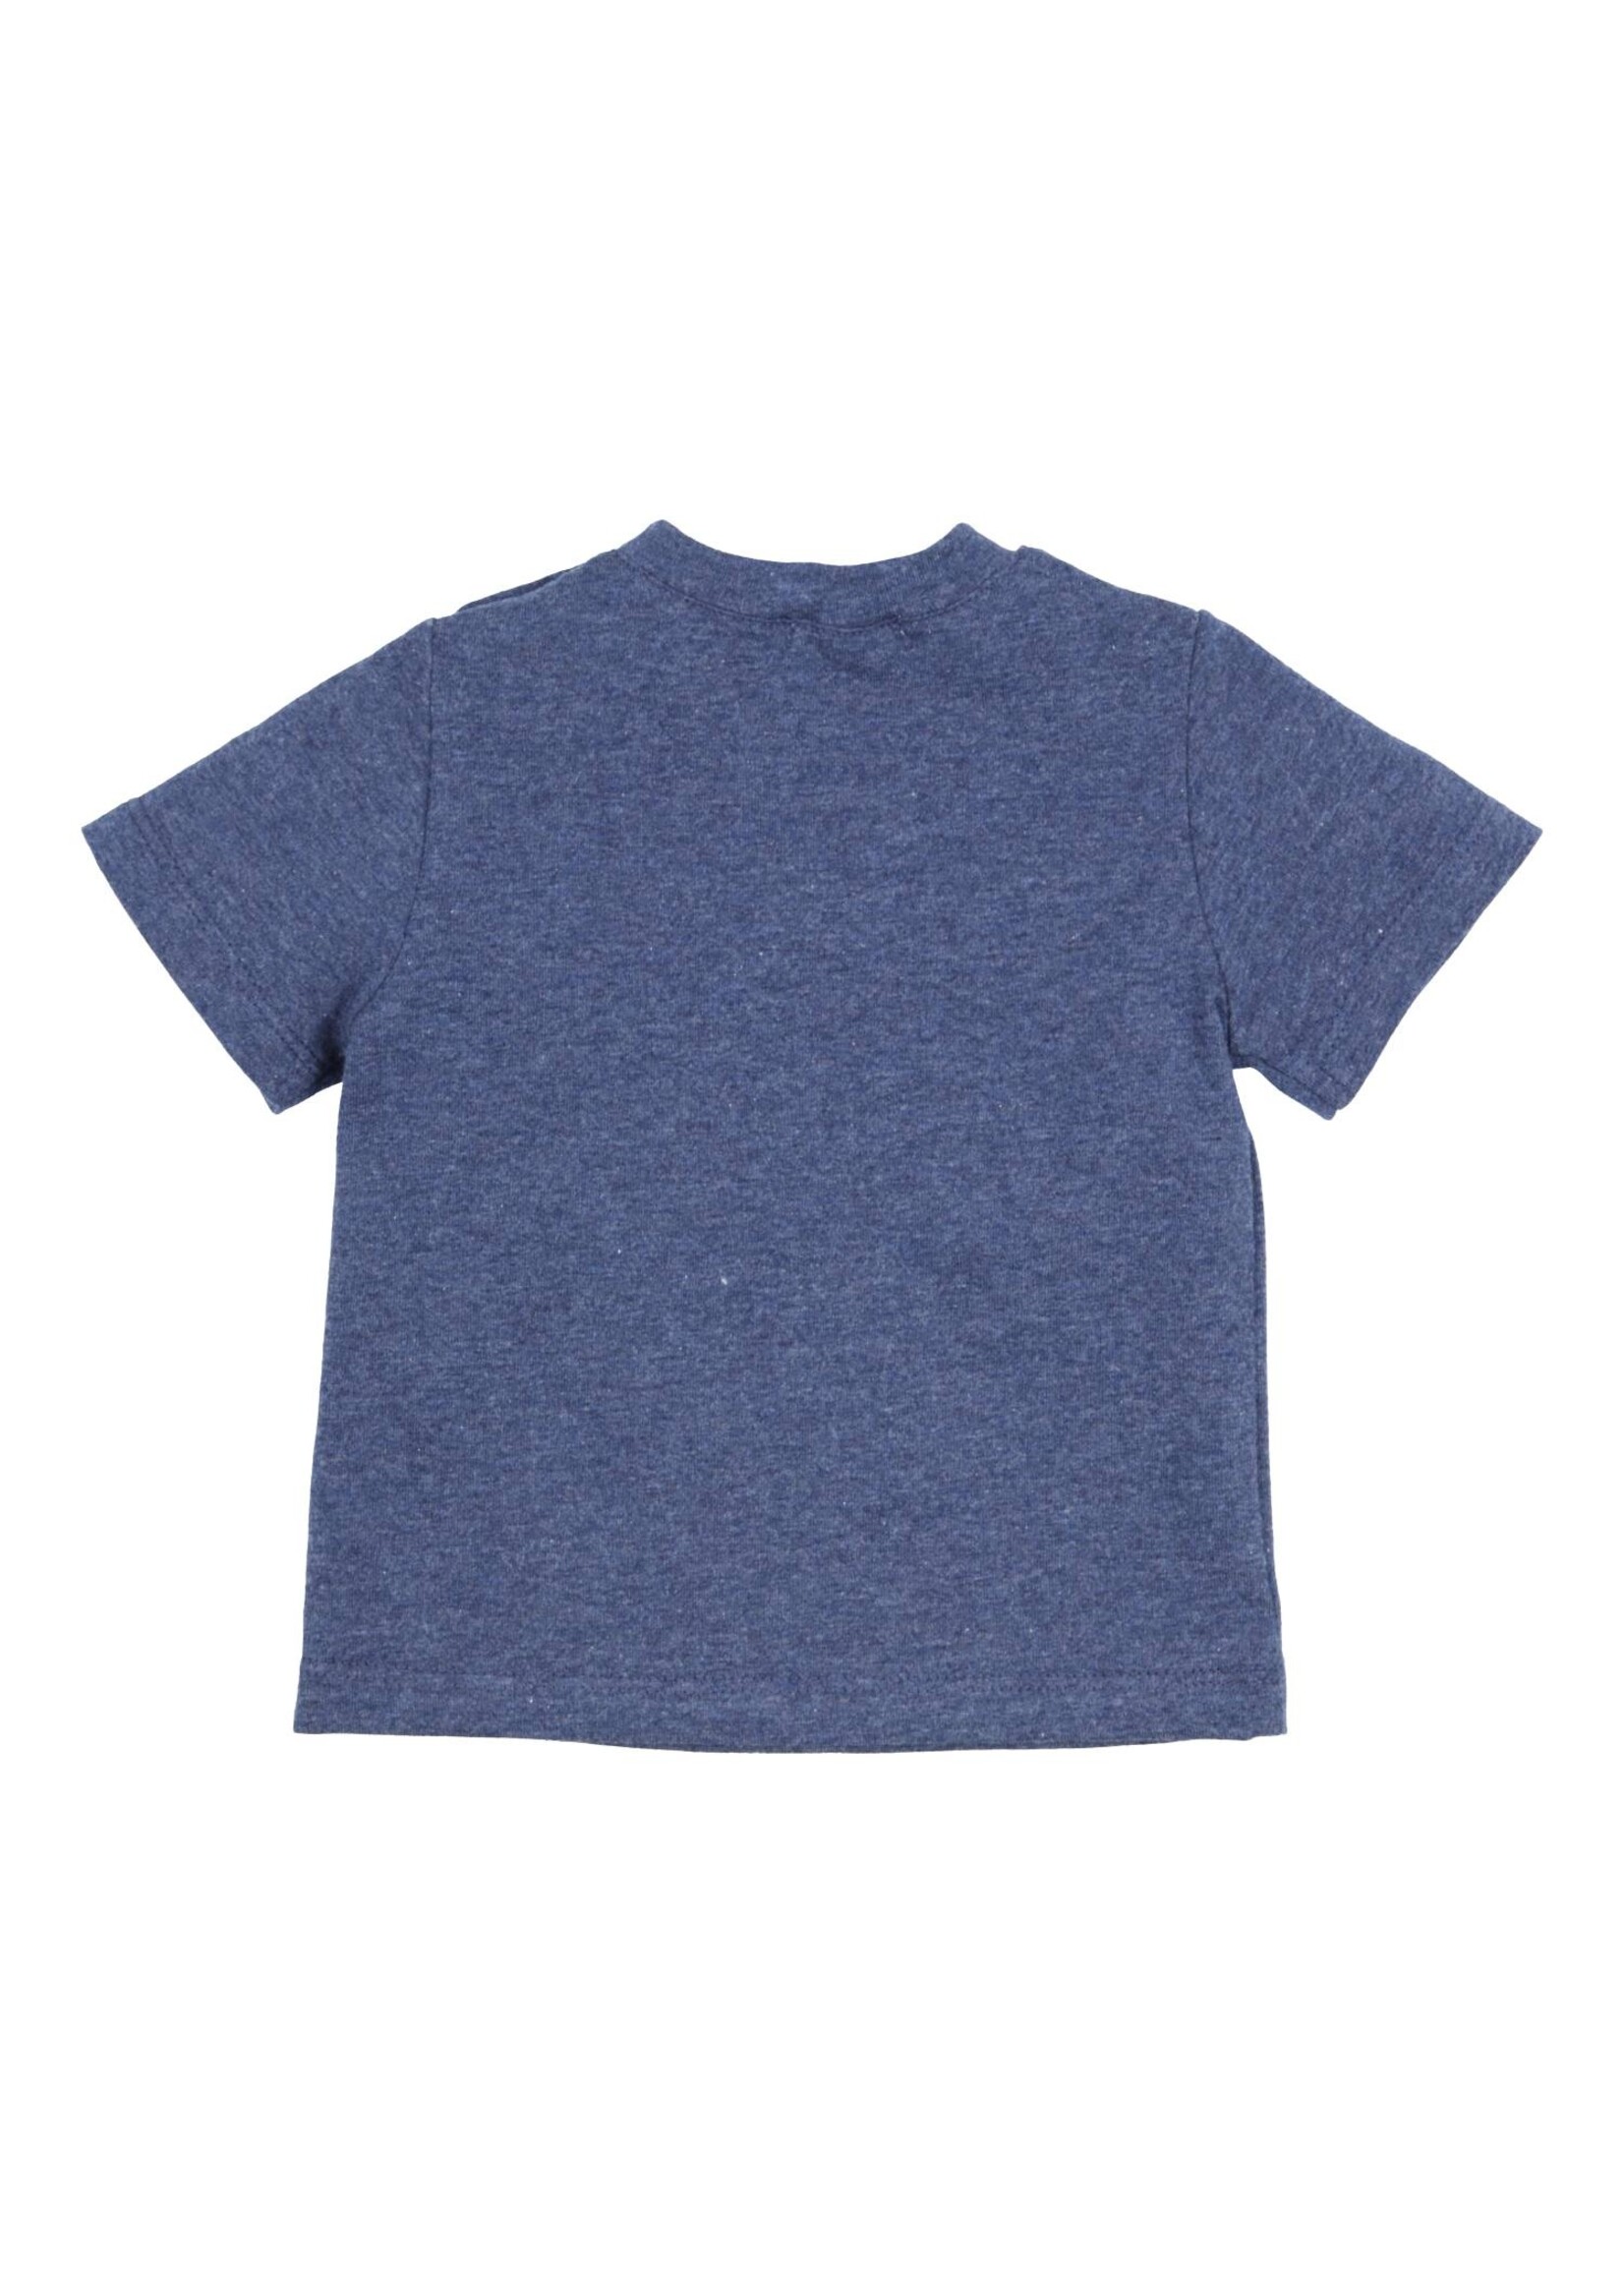 Gymp Boys T-shirt Aerochine Rock the Boat 353-4426-20 Blue